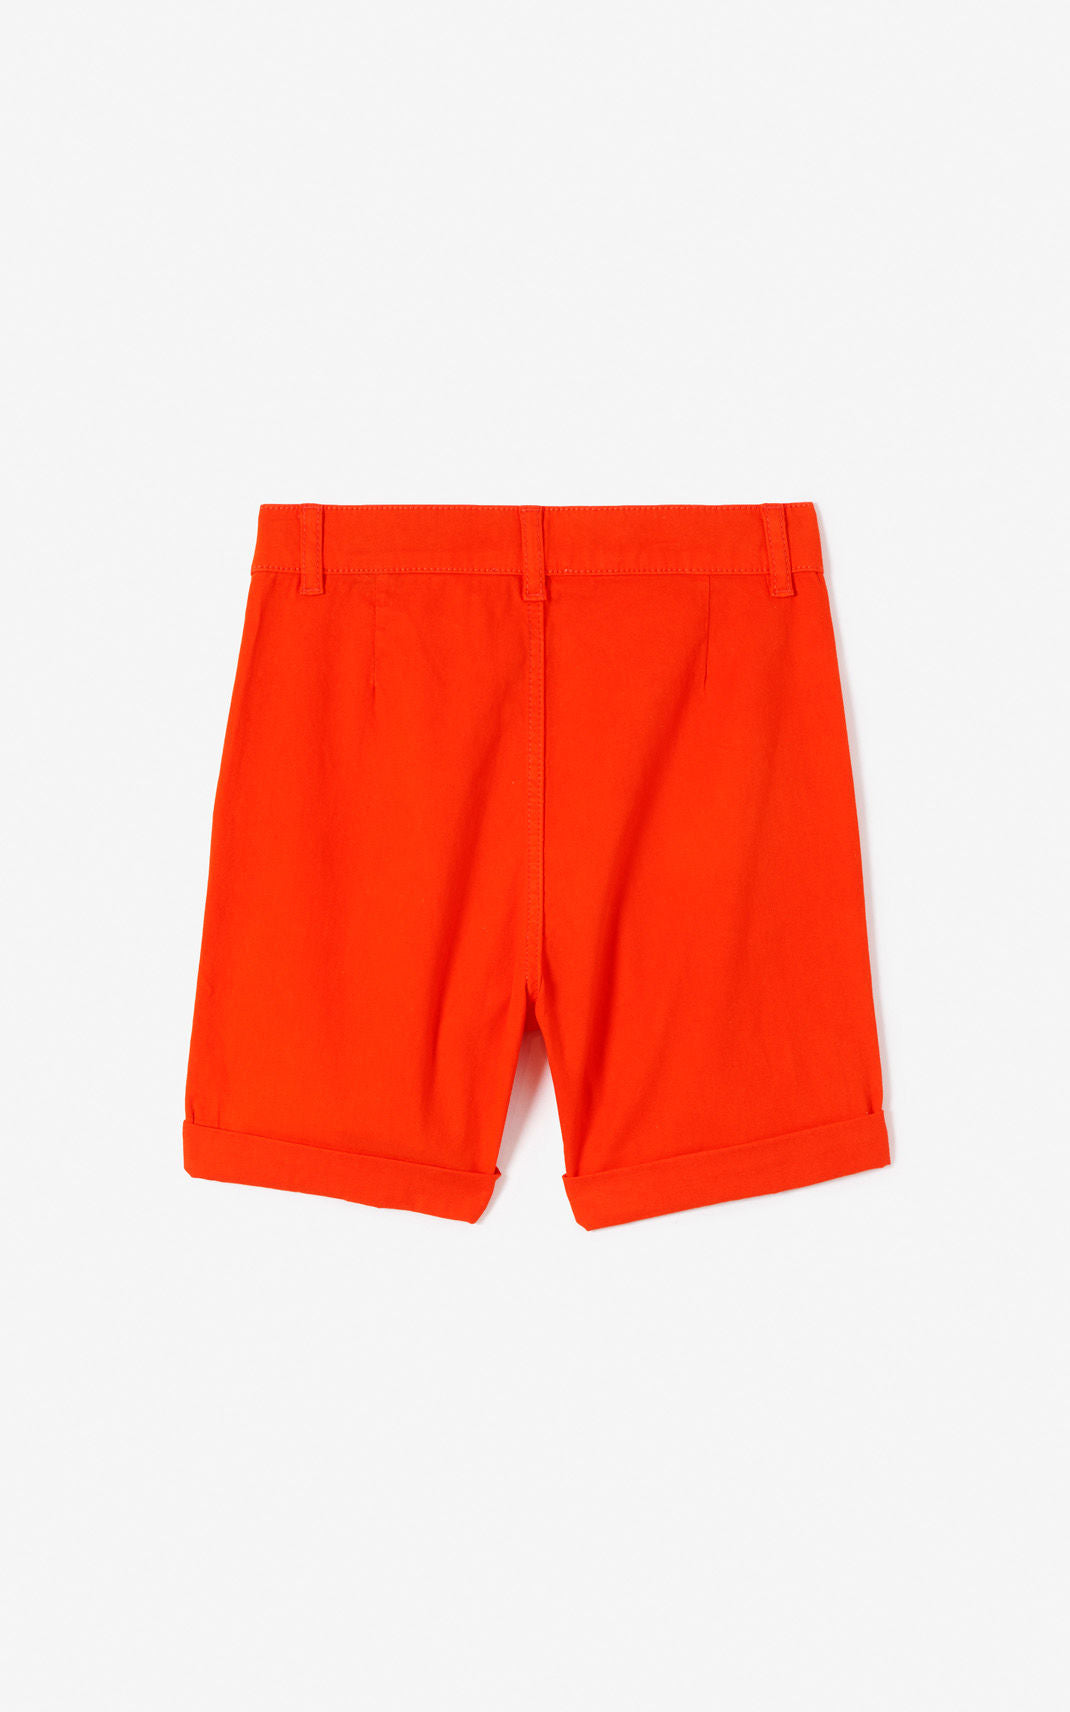 Boys Vivid Orange Cotton Shorts